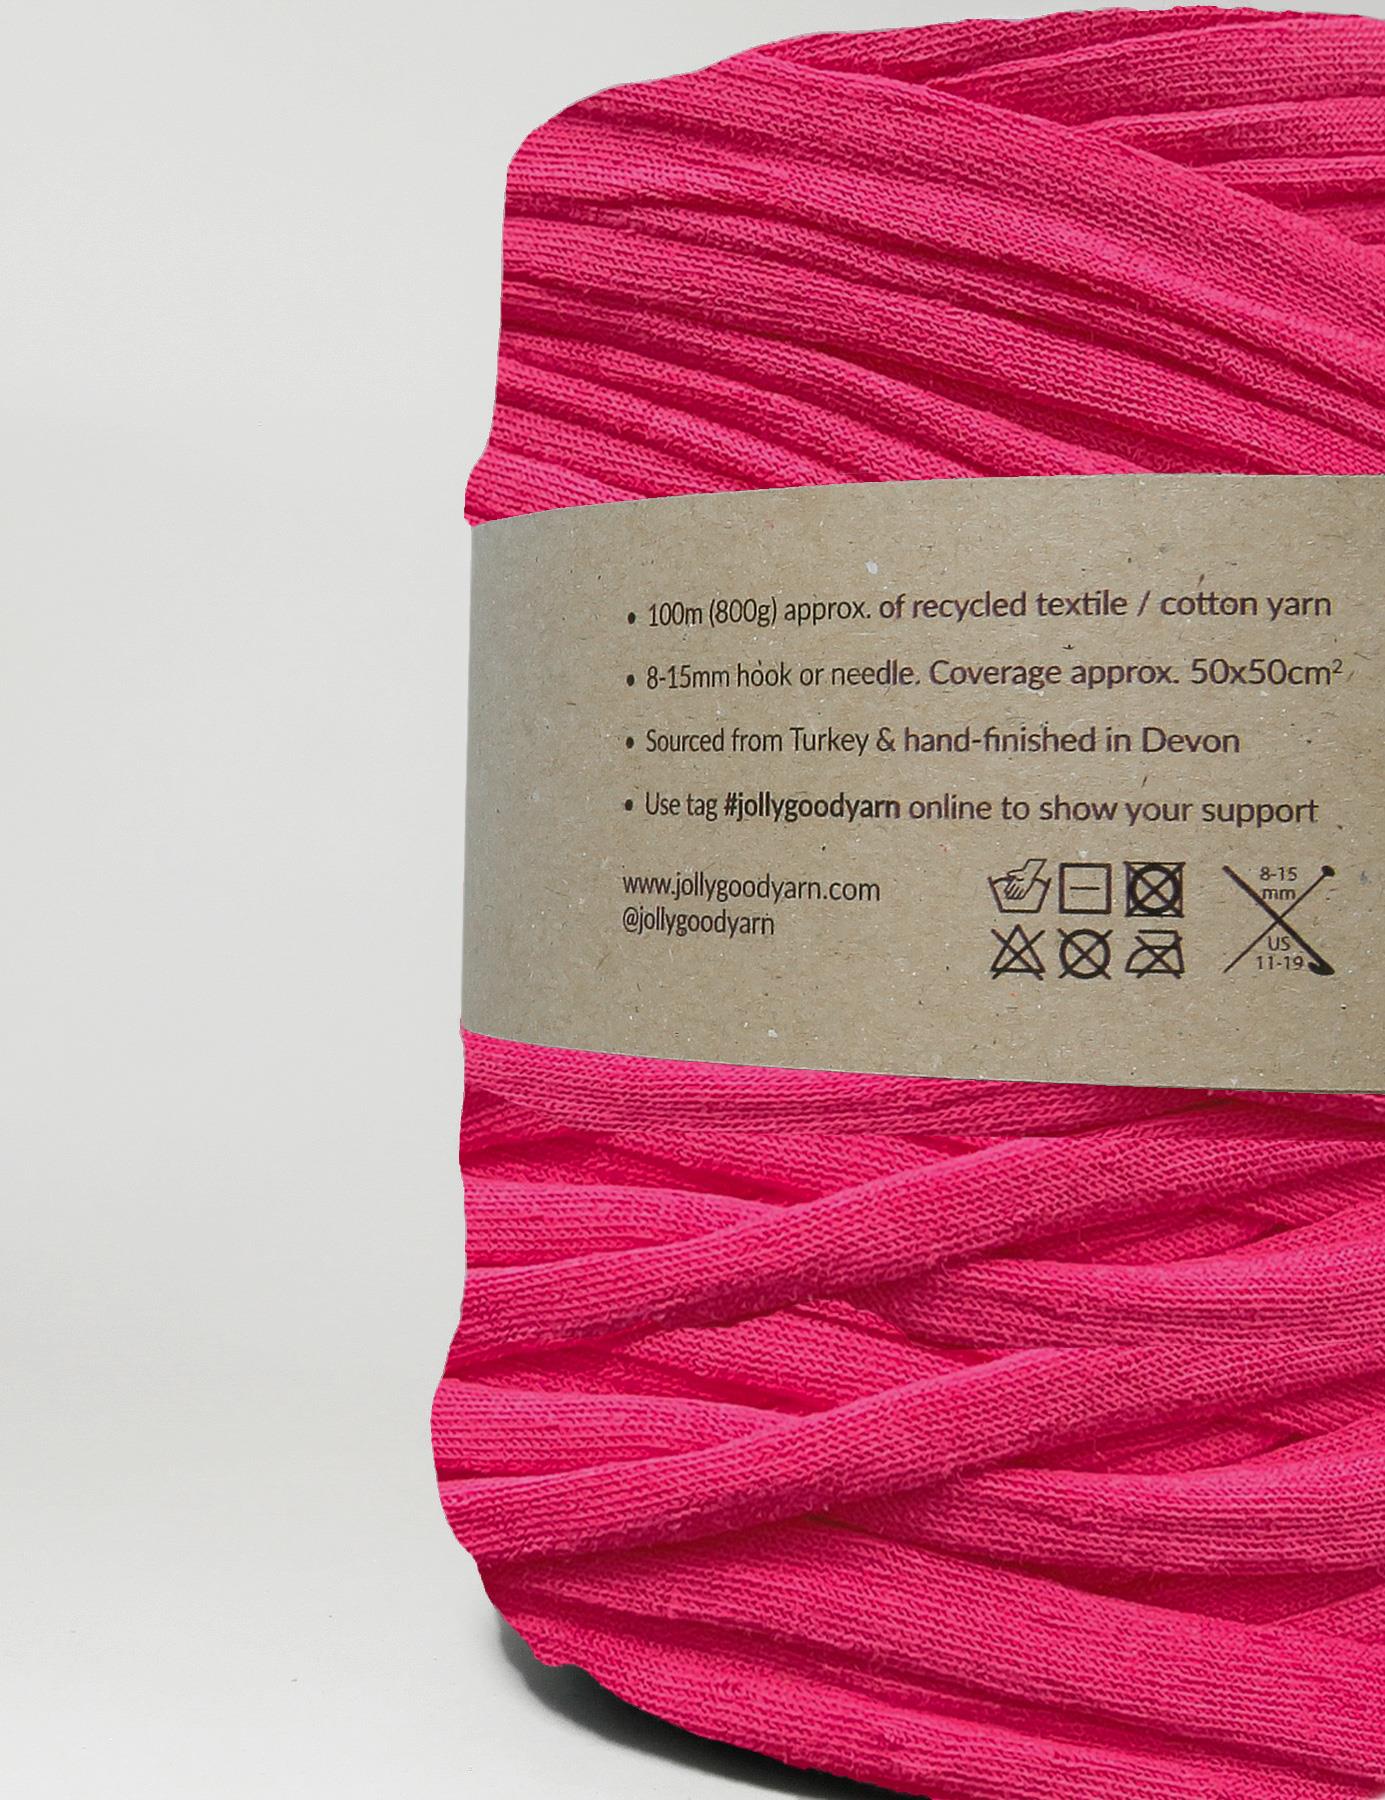 Soft fuchsia pink t-shirt yarn (100-120m)